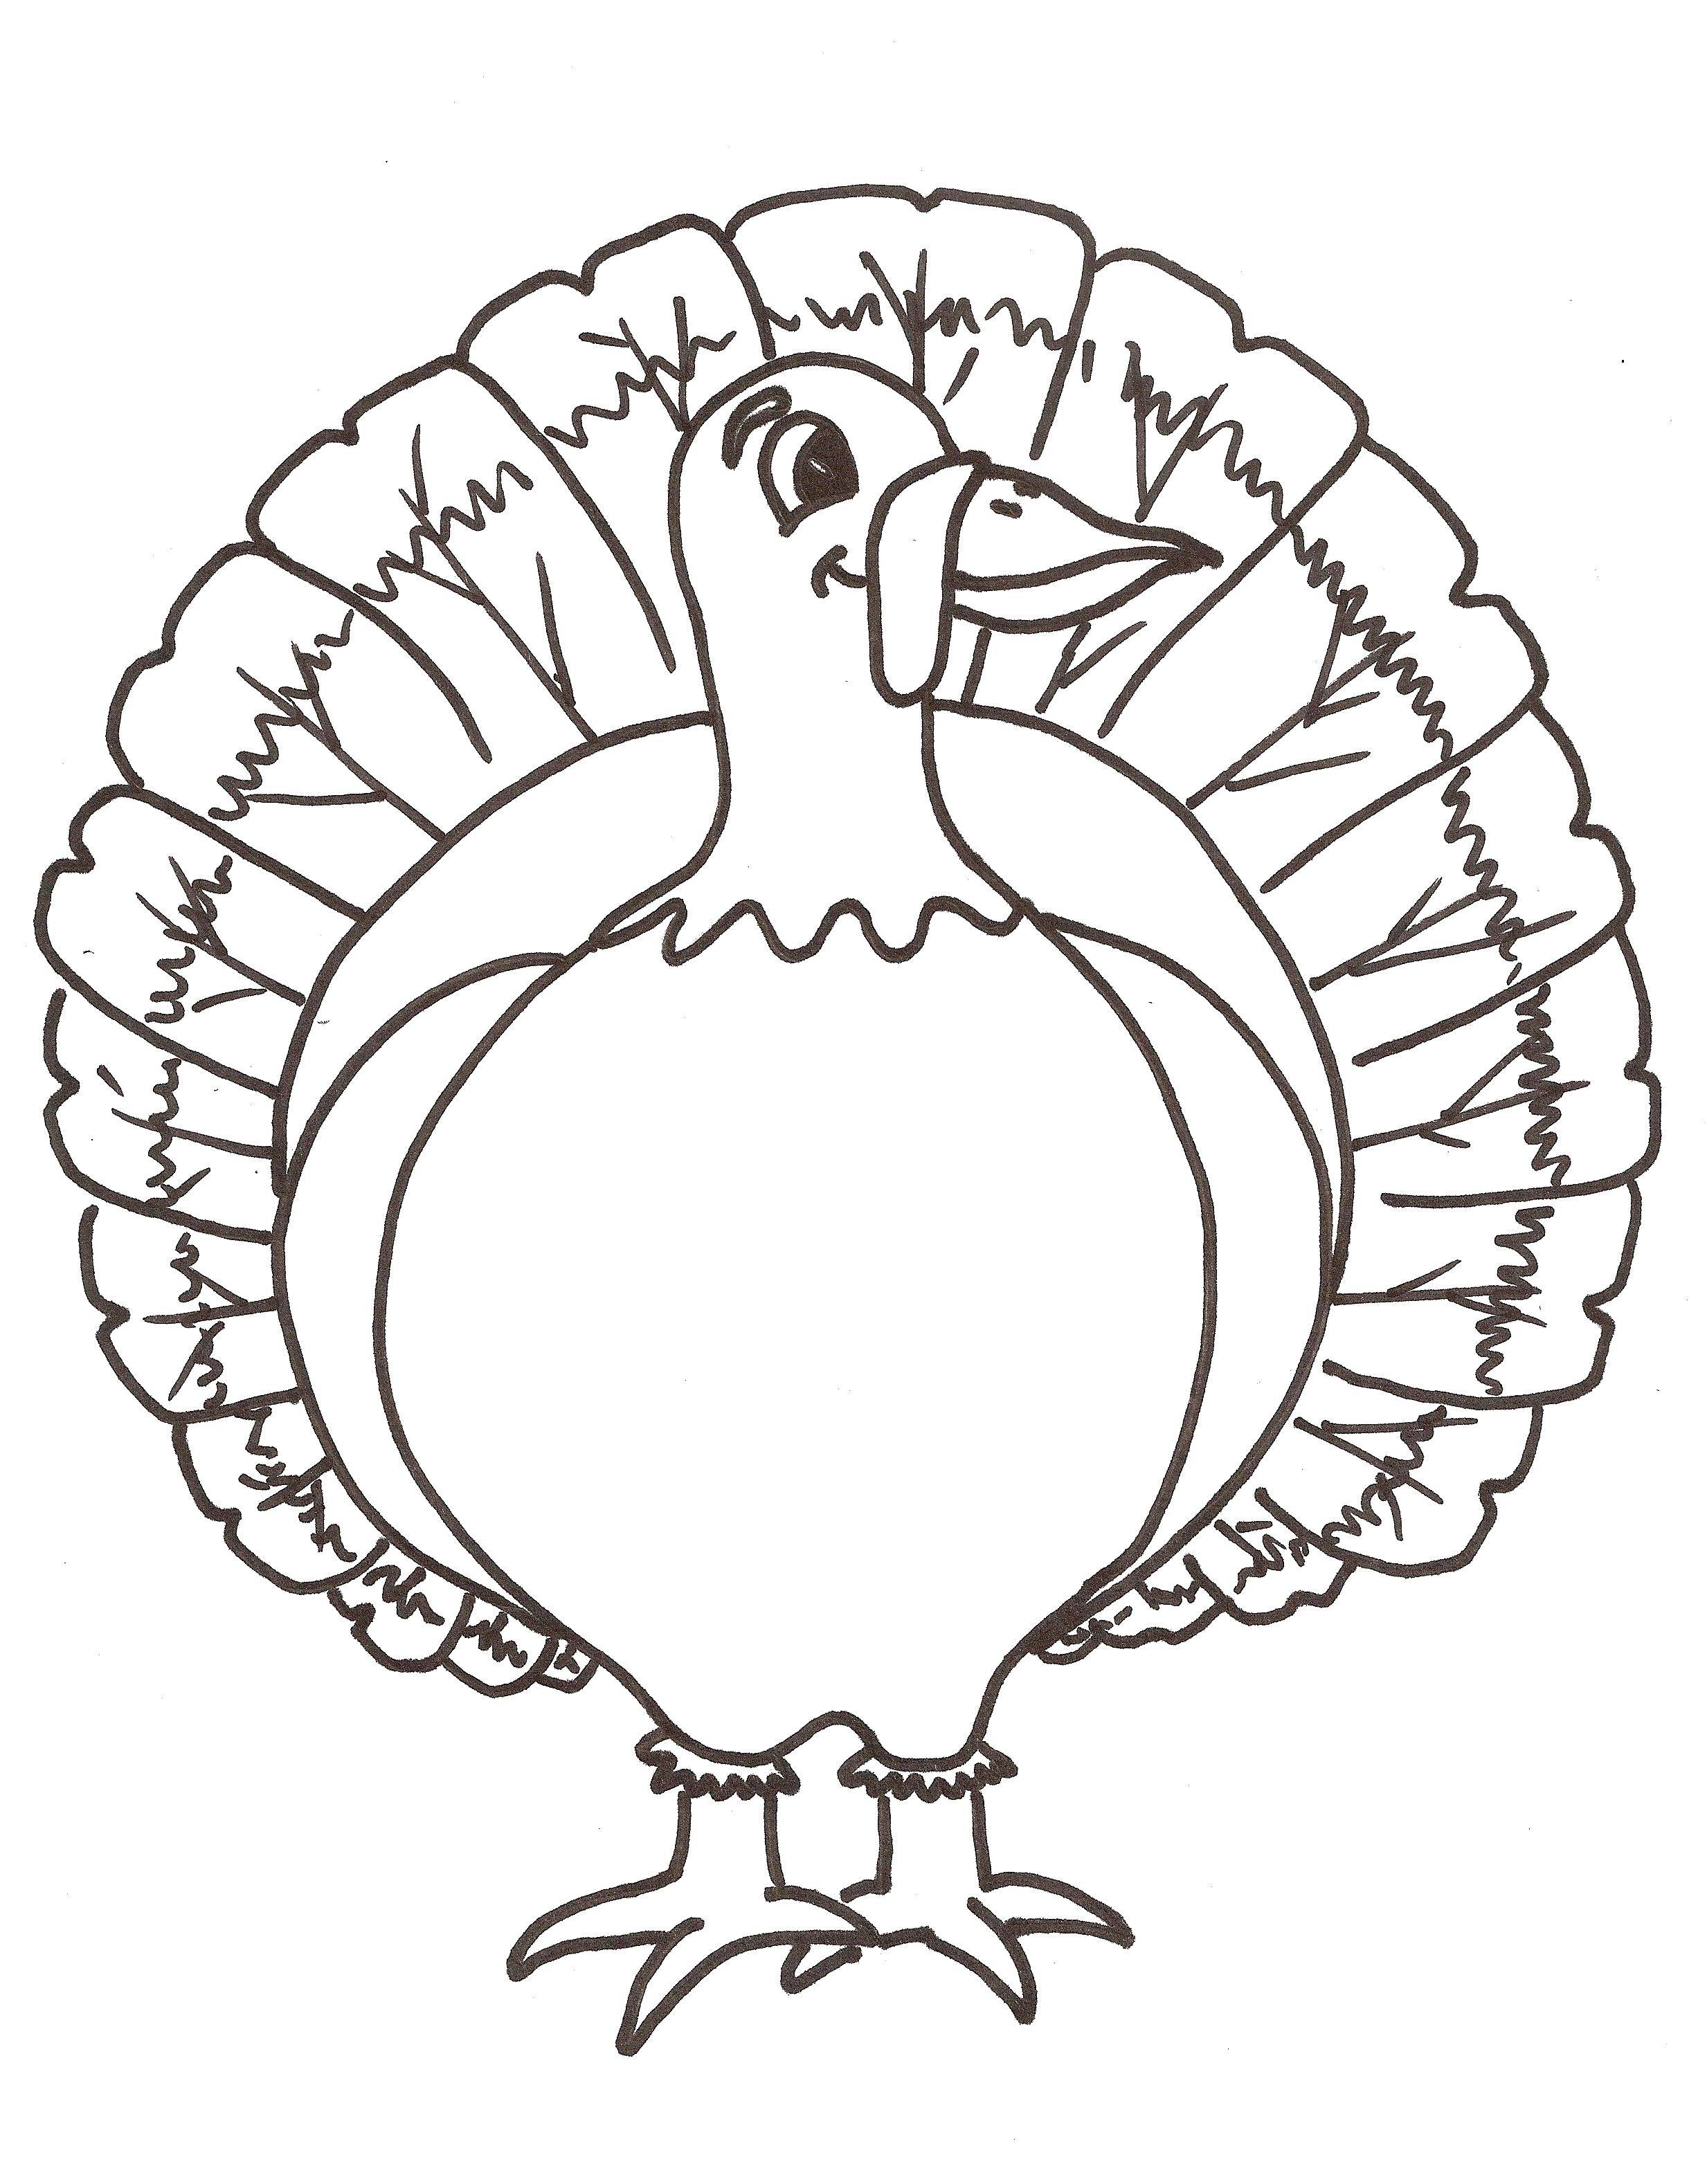 Coloring Turkey.. Category birds. Tags:  poultry, Turkey, Turkey.